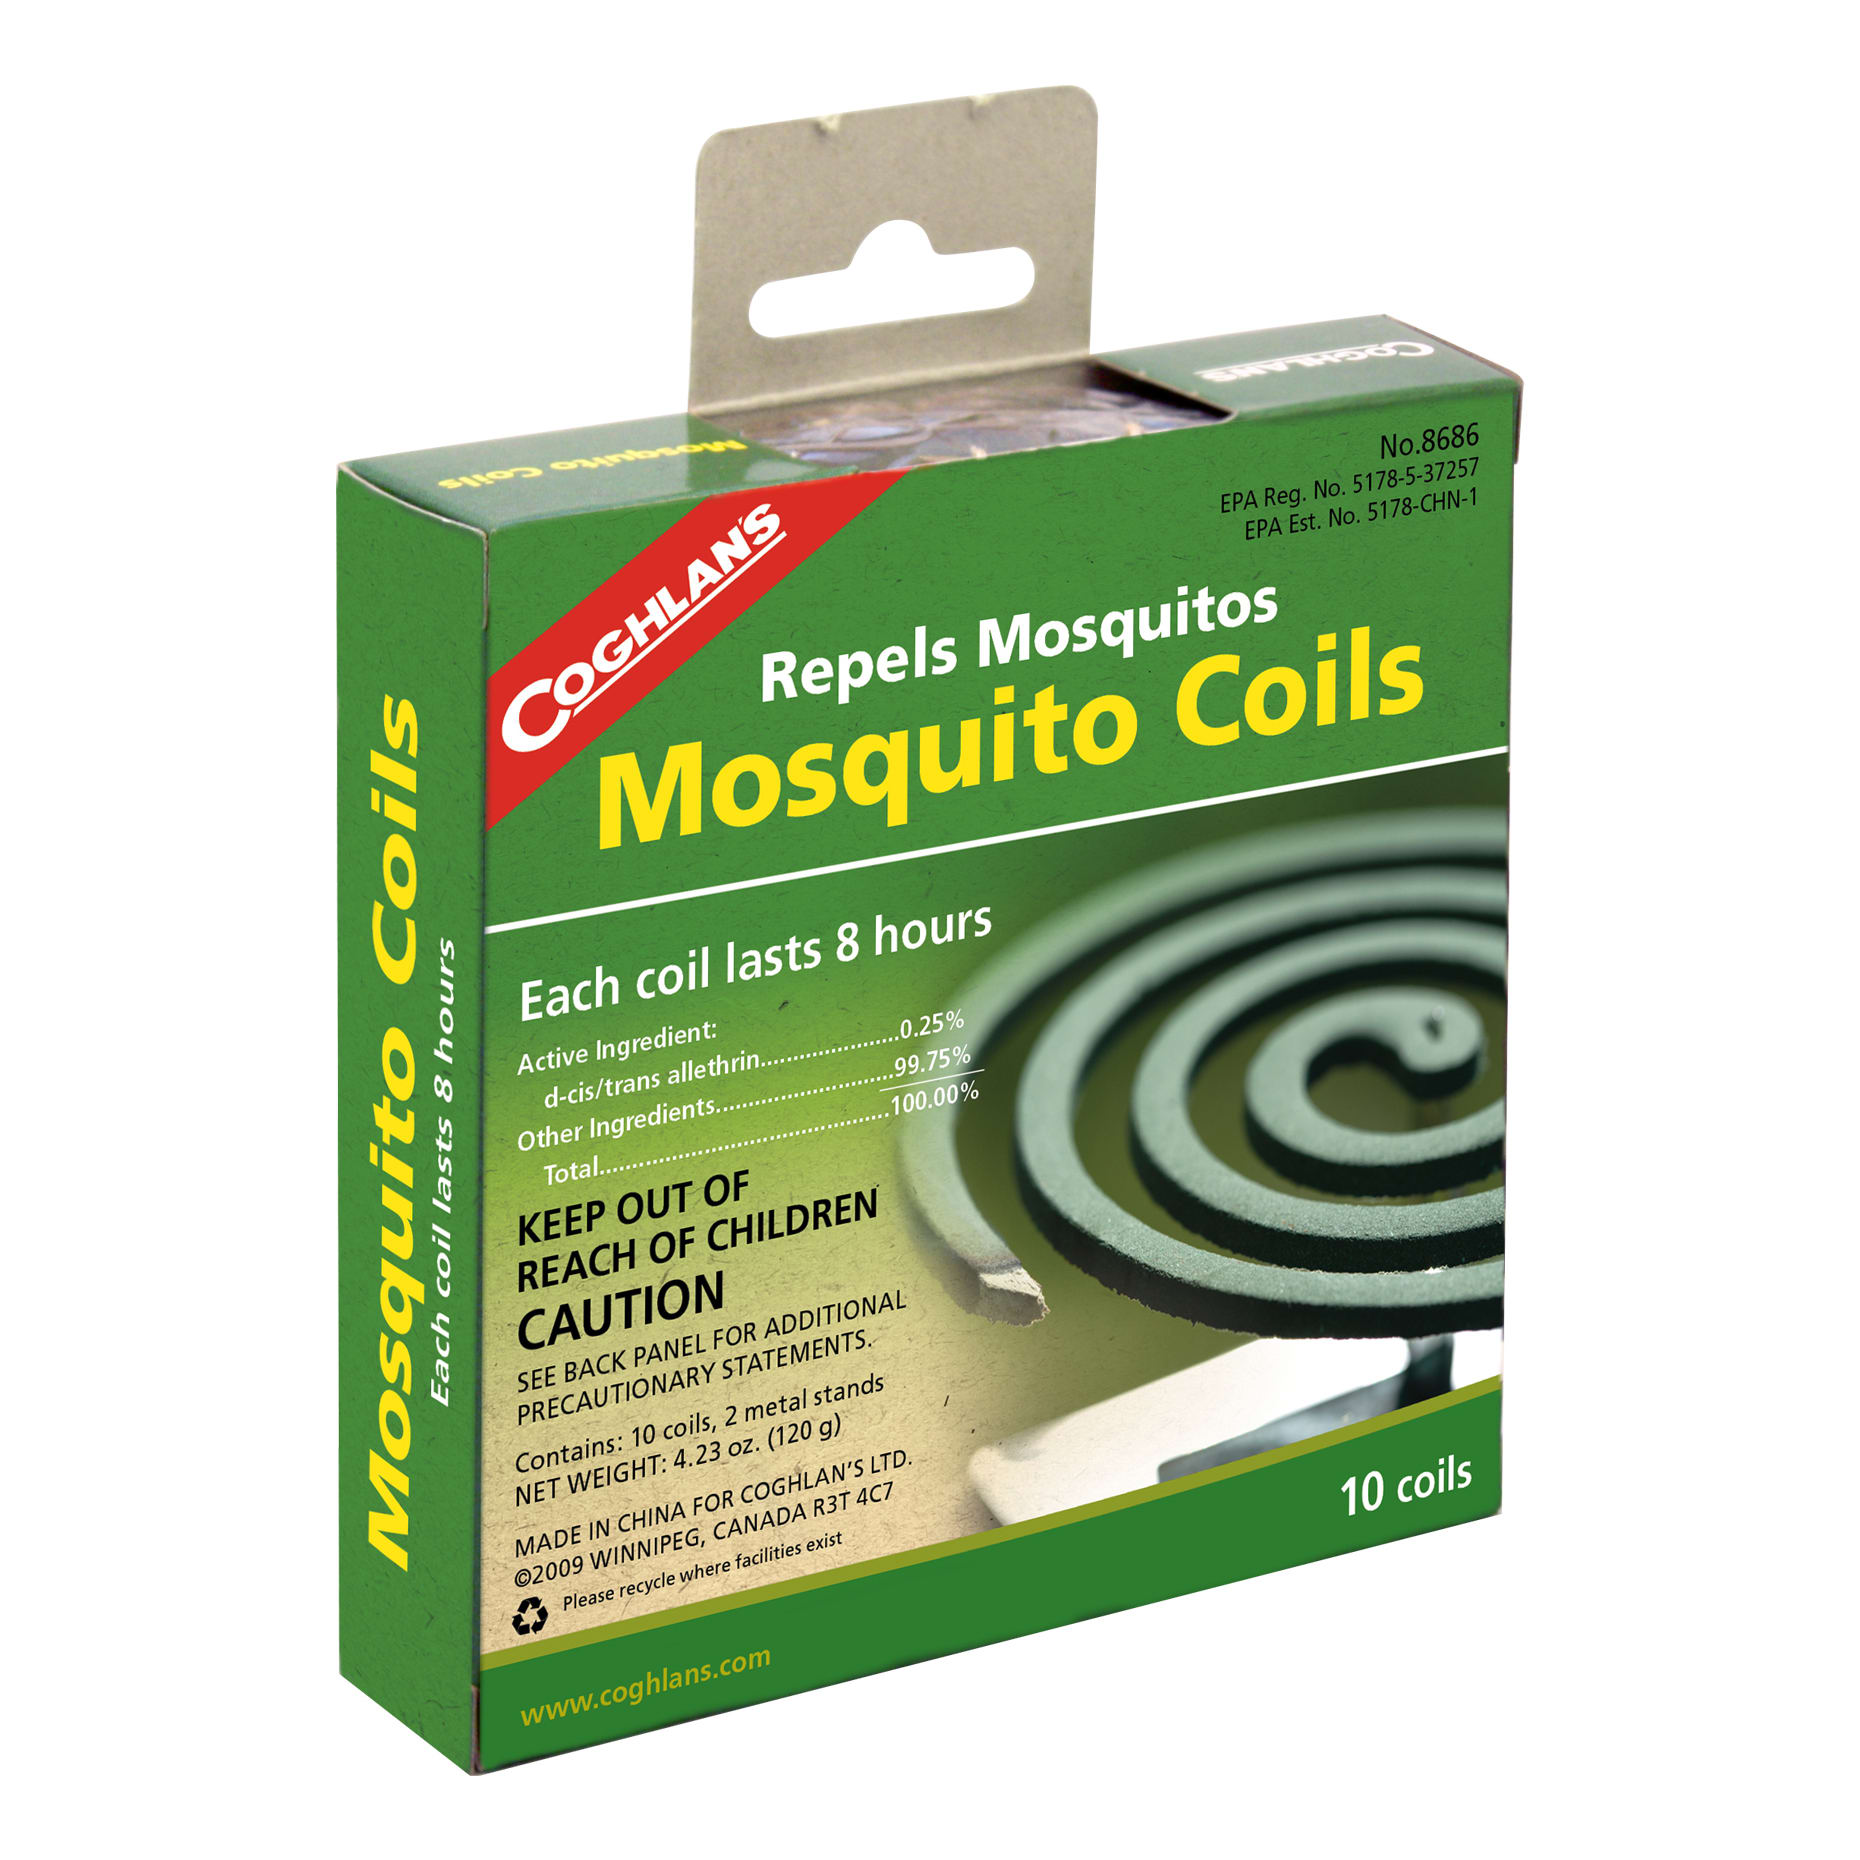 Coghlan's Mosquito Coils